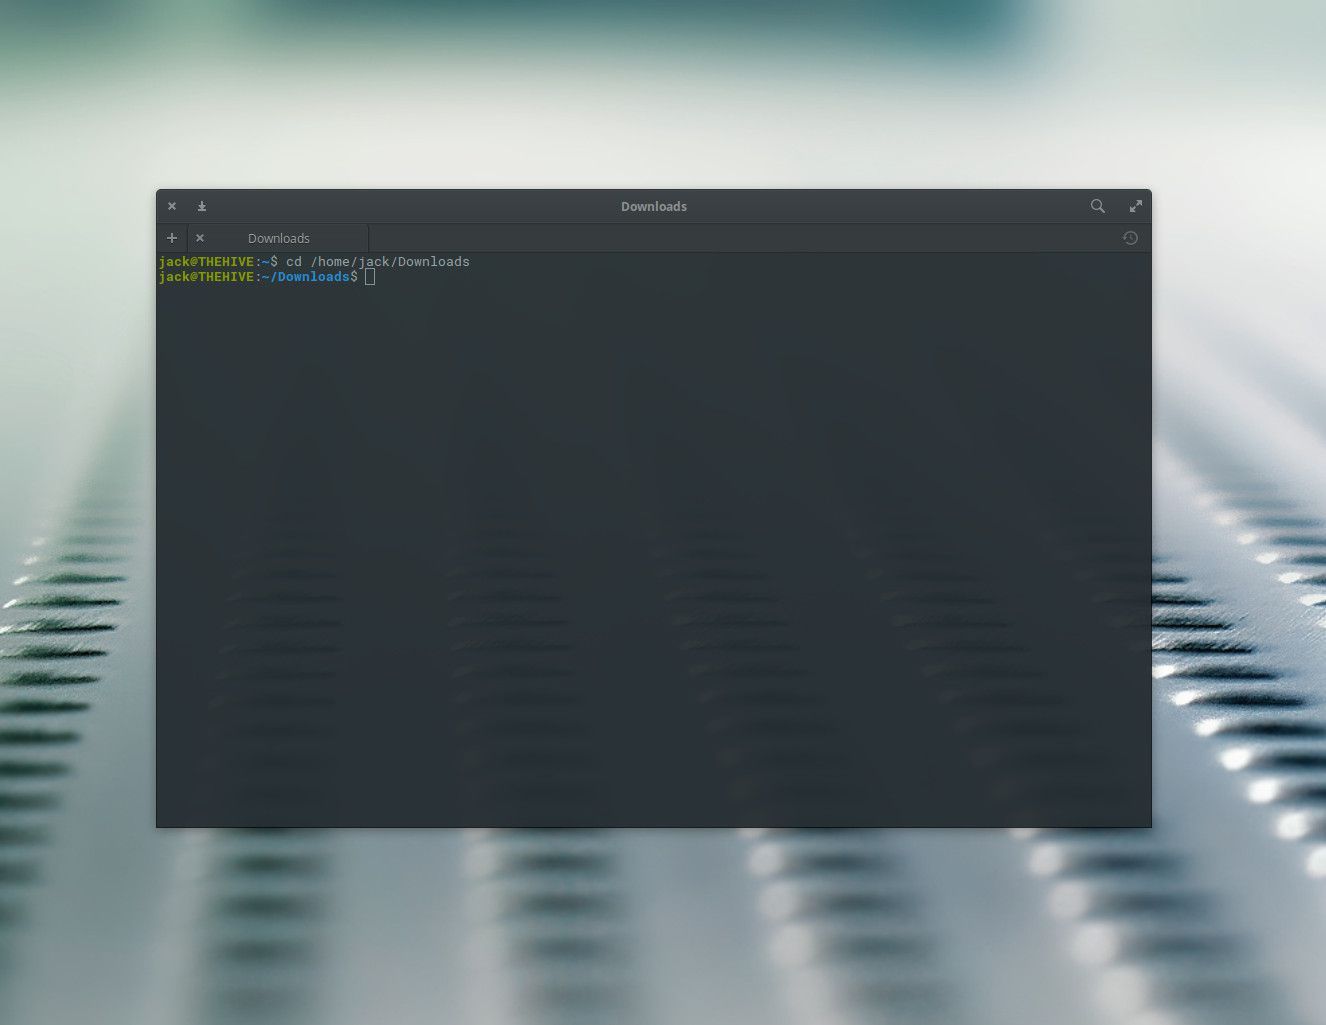 Снимок экрана: команда терминала Linux.